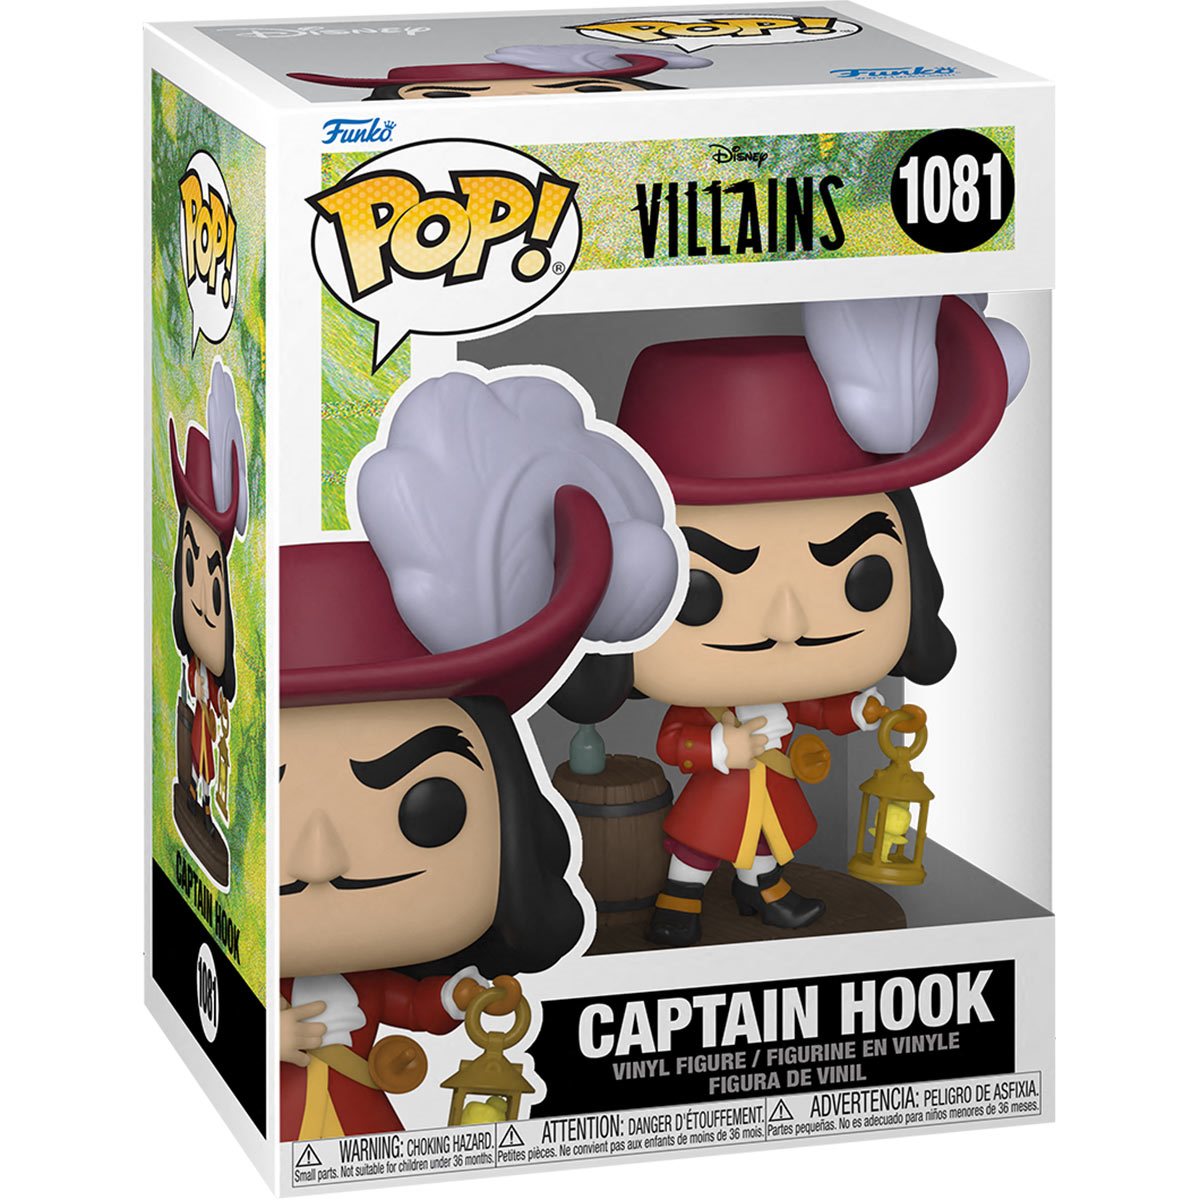 Disney Villains - Captain Hook Pop! Vinyl Figure (1081)